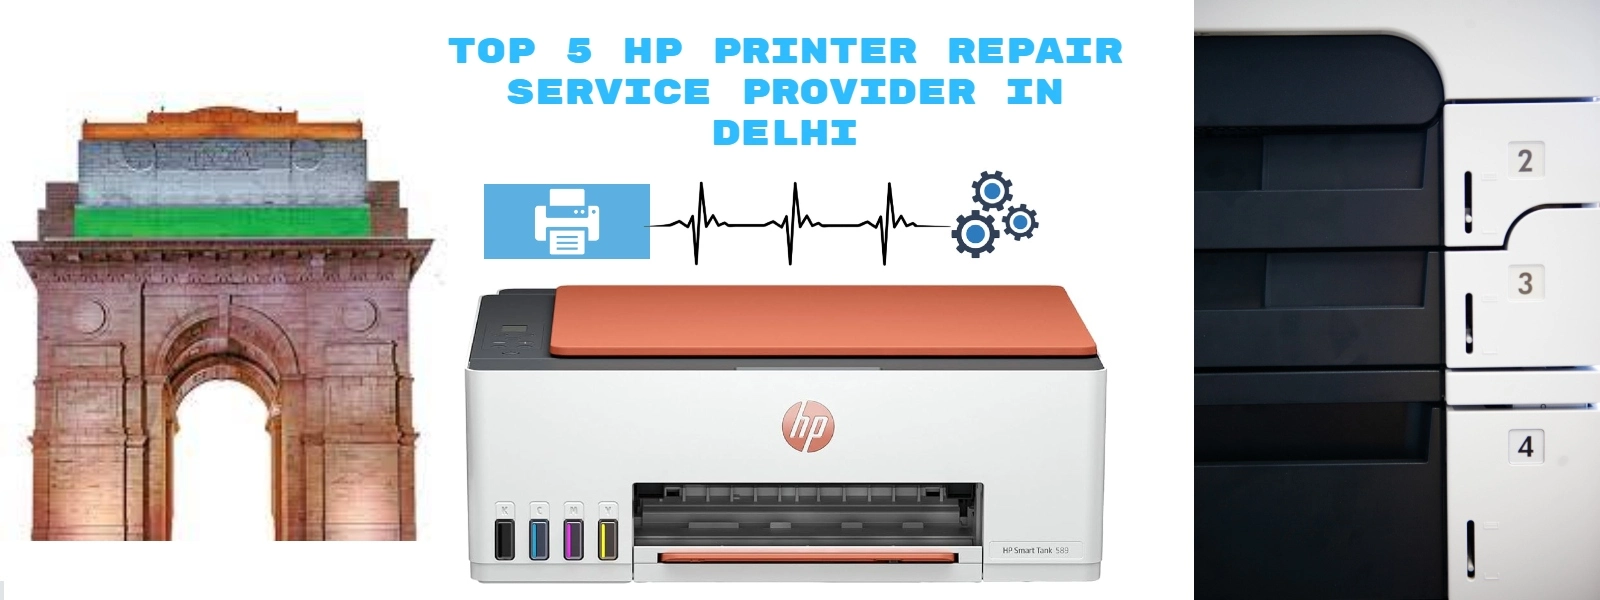 Top 5 HP Printer Repair Service Center Provider In Delhi